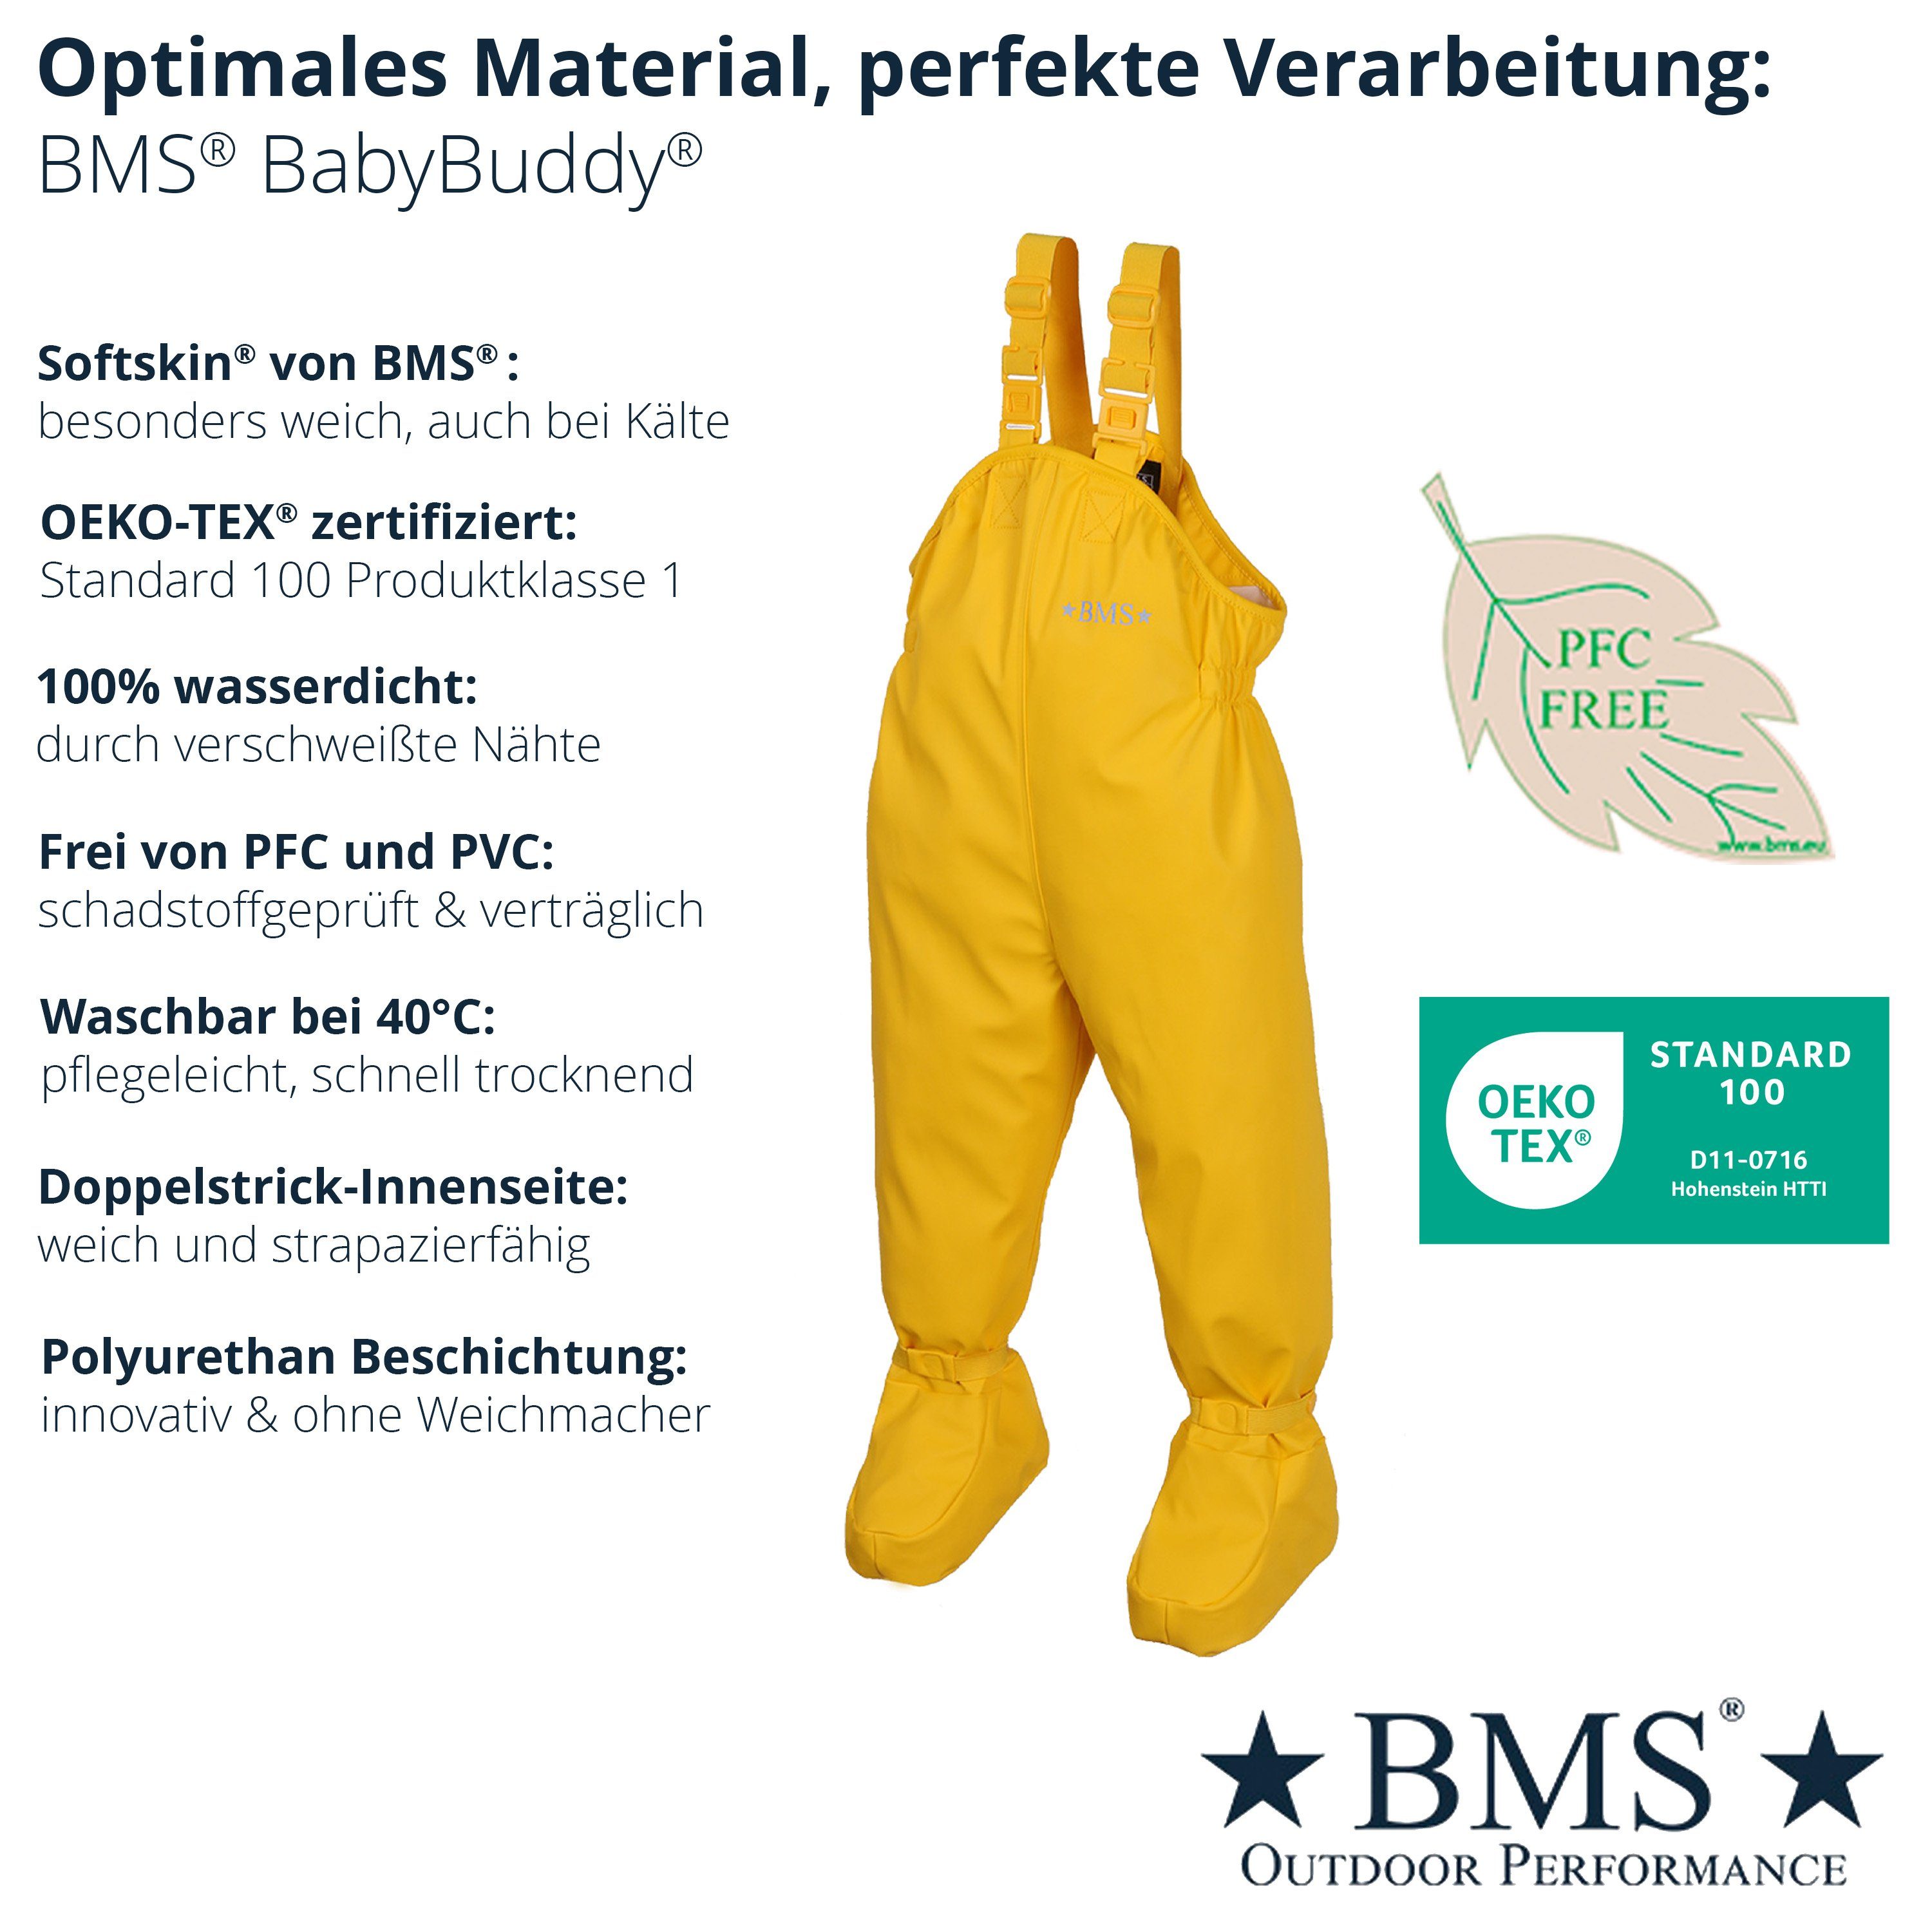 gelb BMS mit Regen- Matschlatzhose Füssling und wasserdichte Füsslingen - Krabbelhose integrierten BMS integrierte BabyBuddy